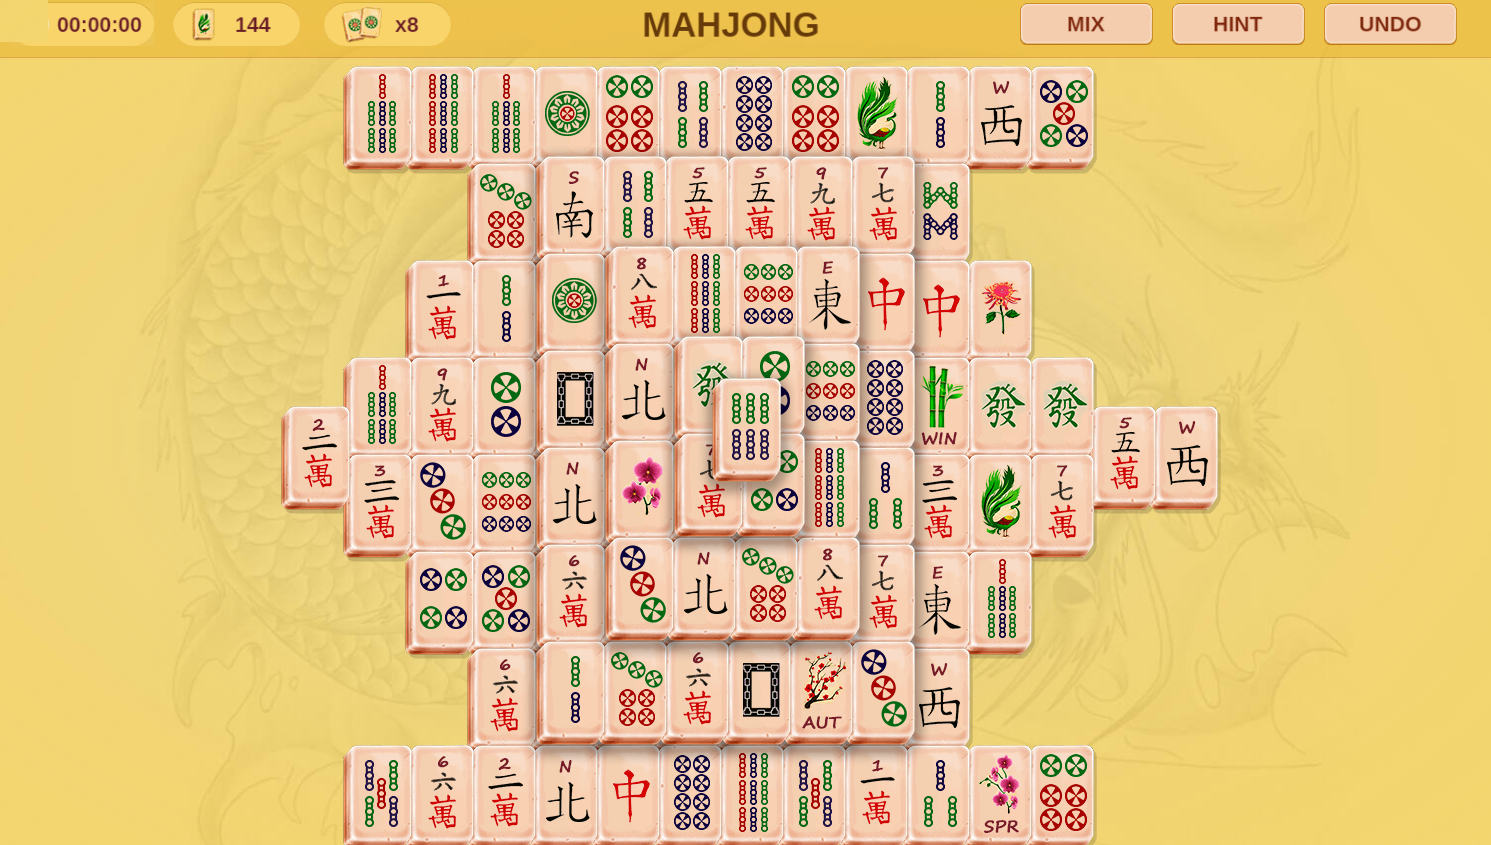 simple mahjong online